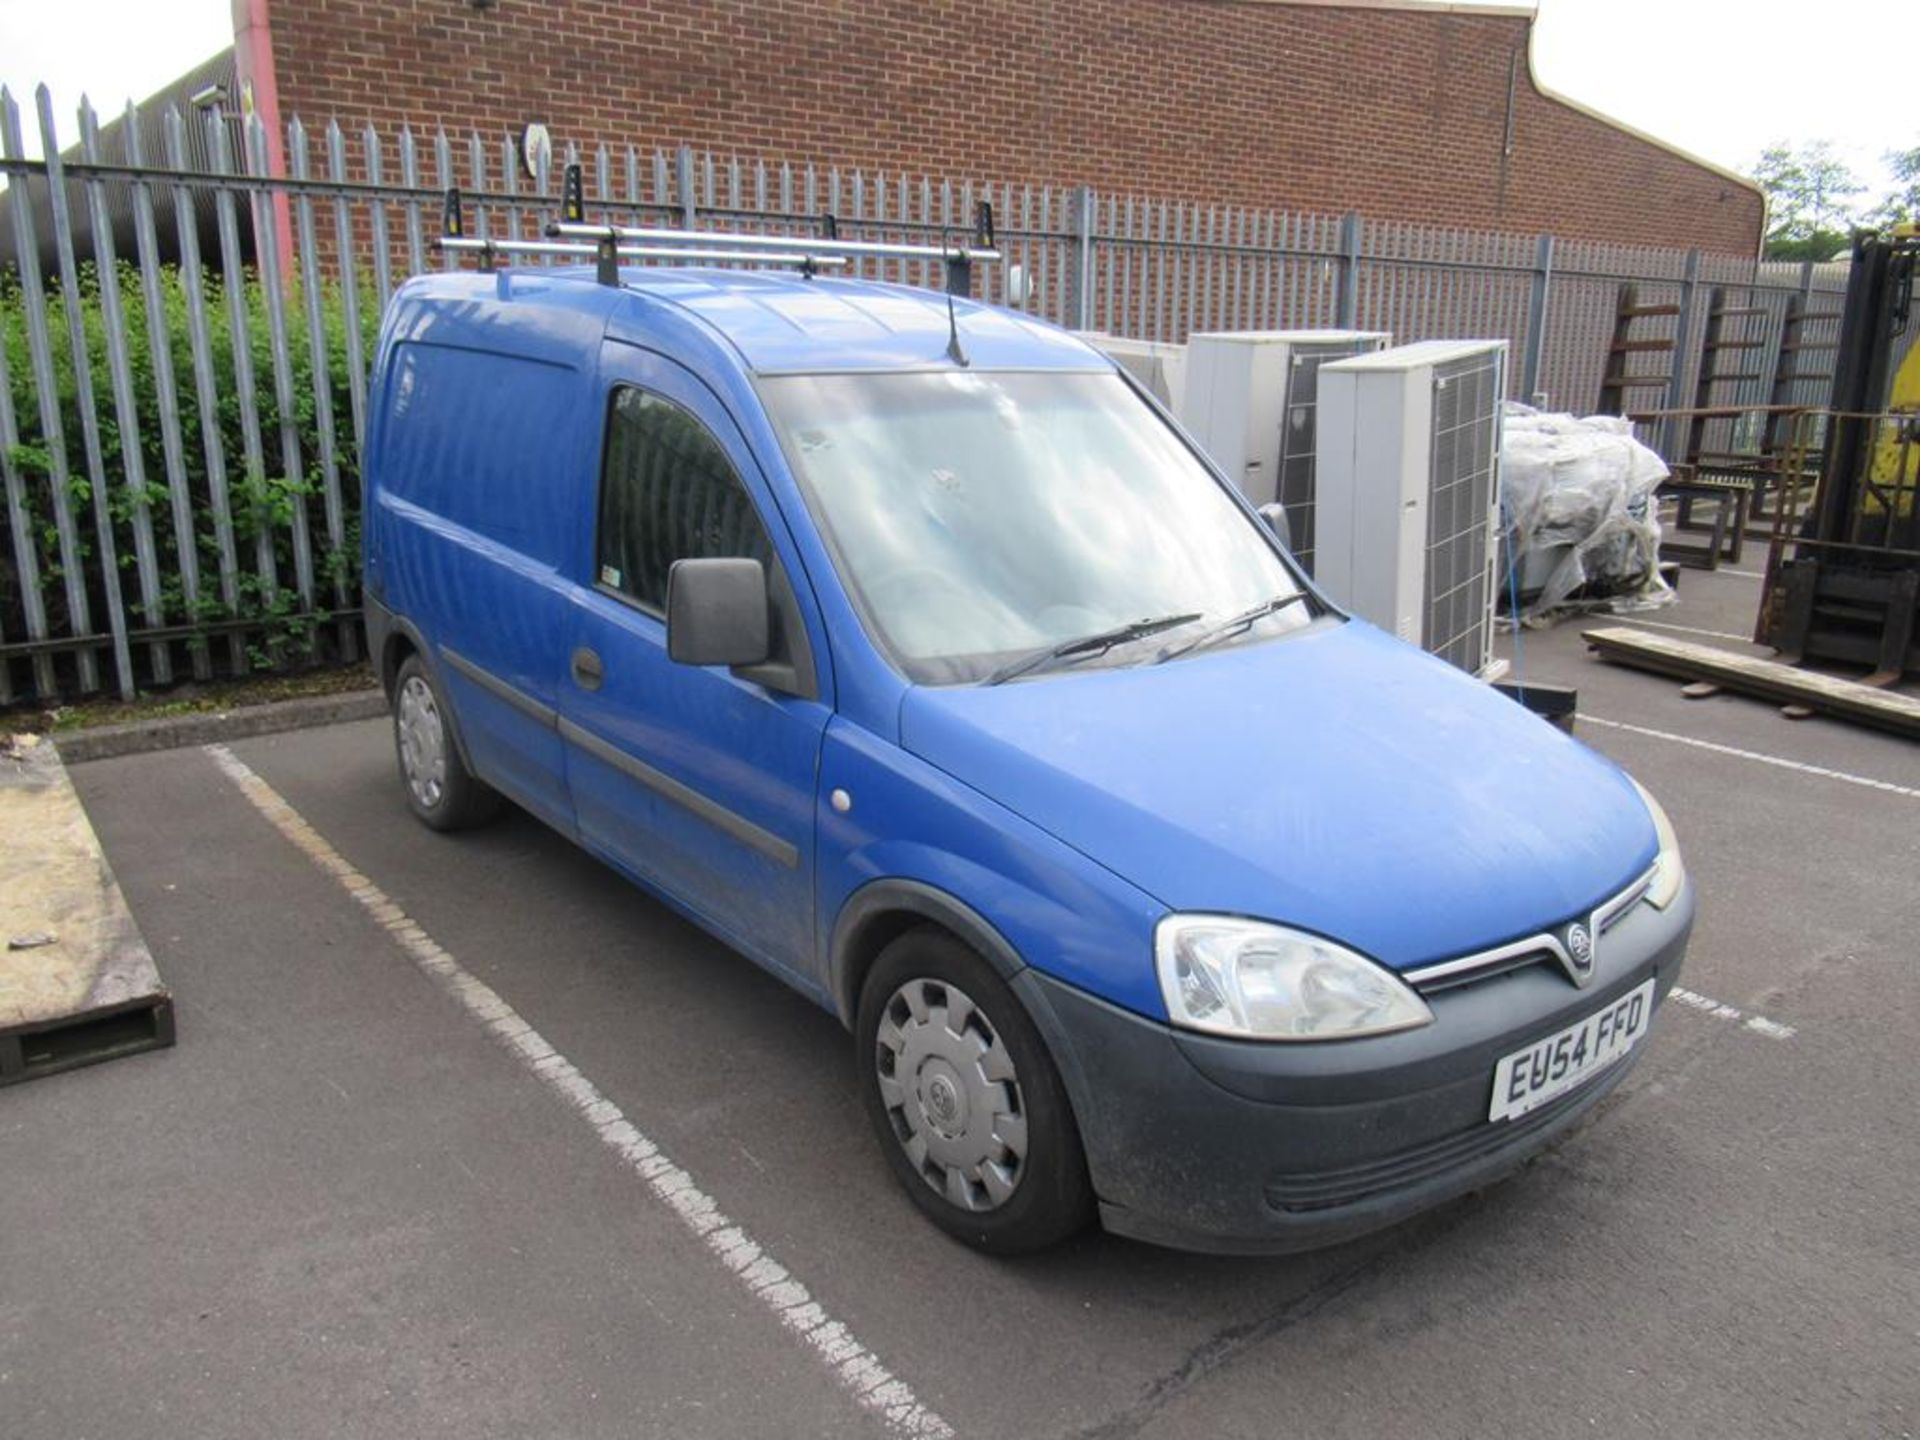 2004 Vauxhall Combo 2000 DI EU54 FFD Van - Image 2 of 14